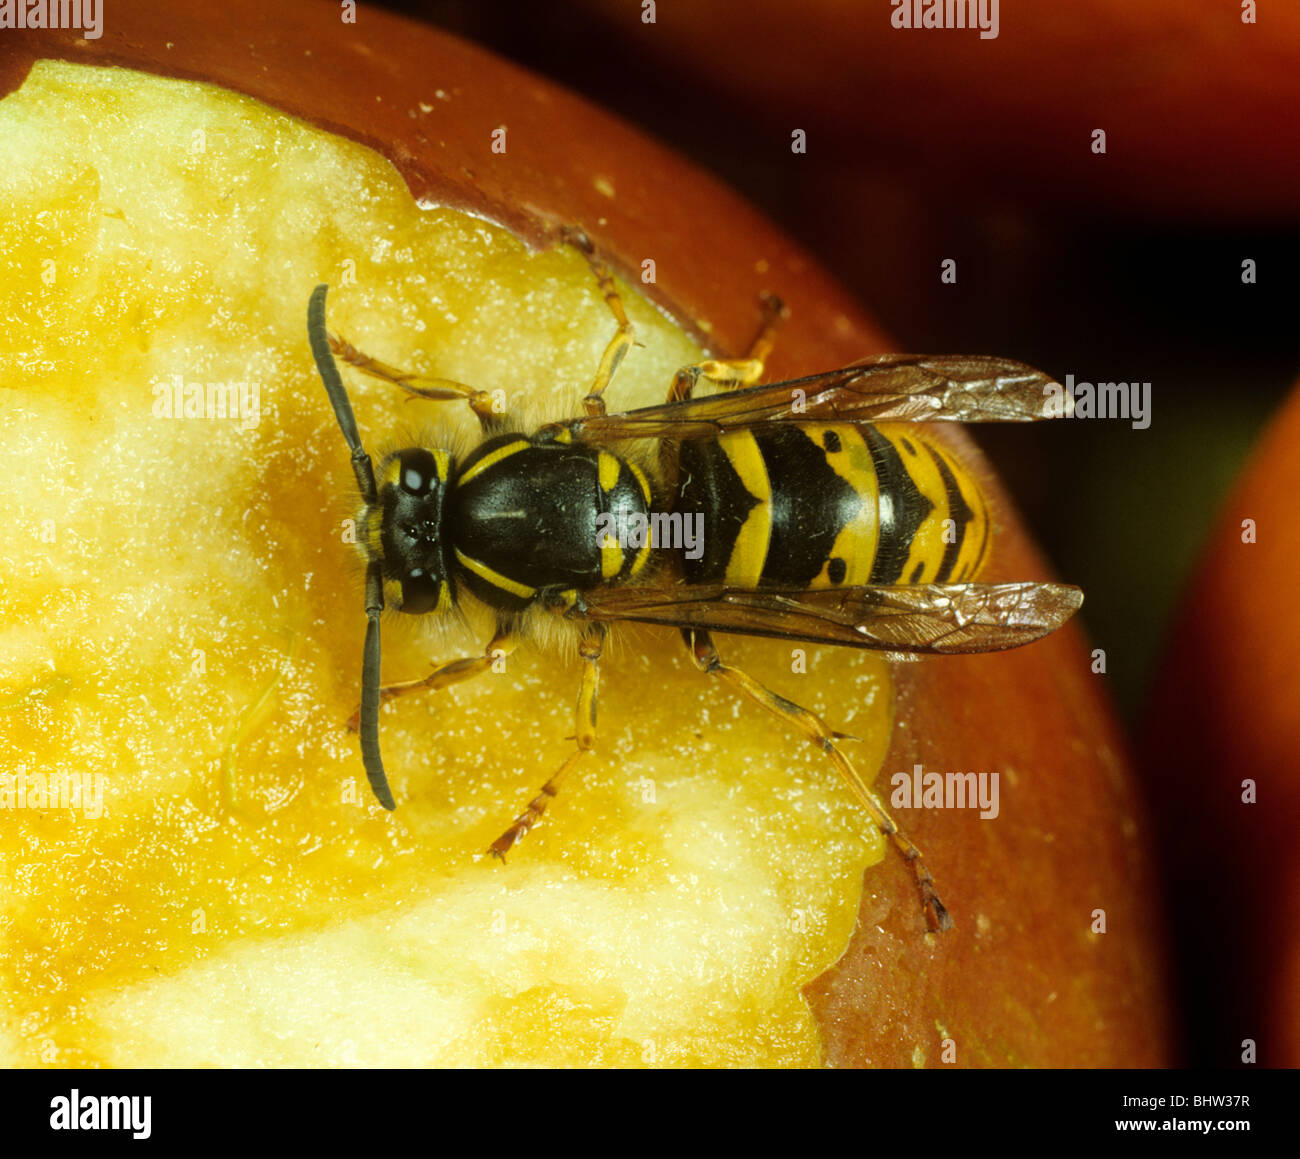 Wasp (Vespula vulgaris) on damaged apple Stock Photo